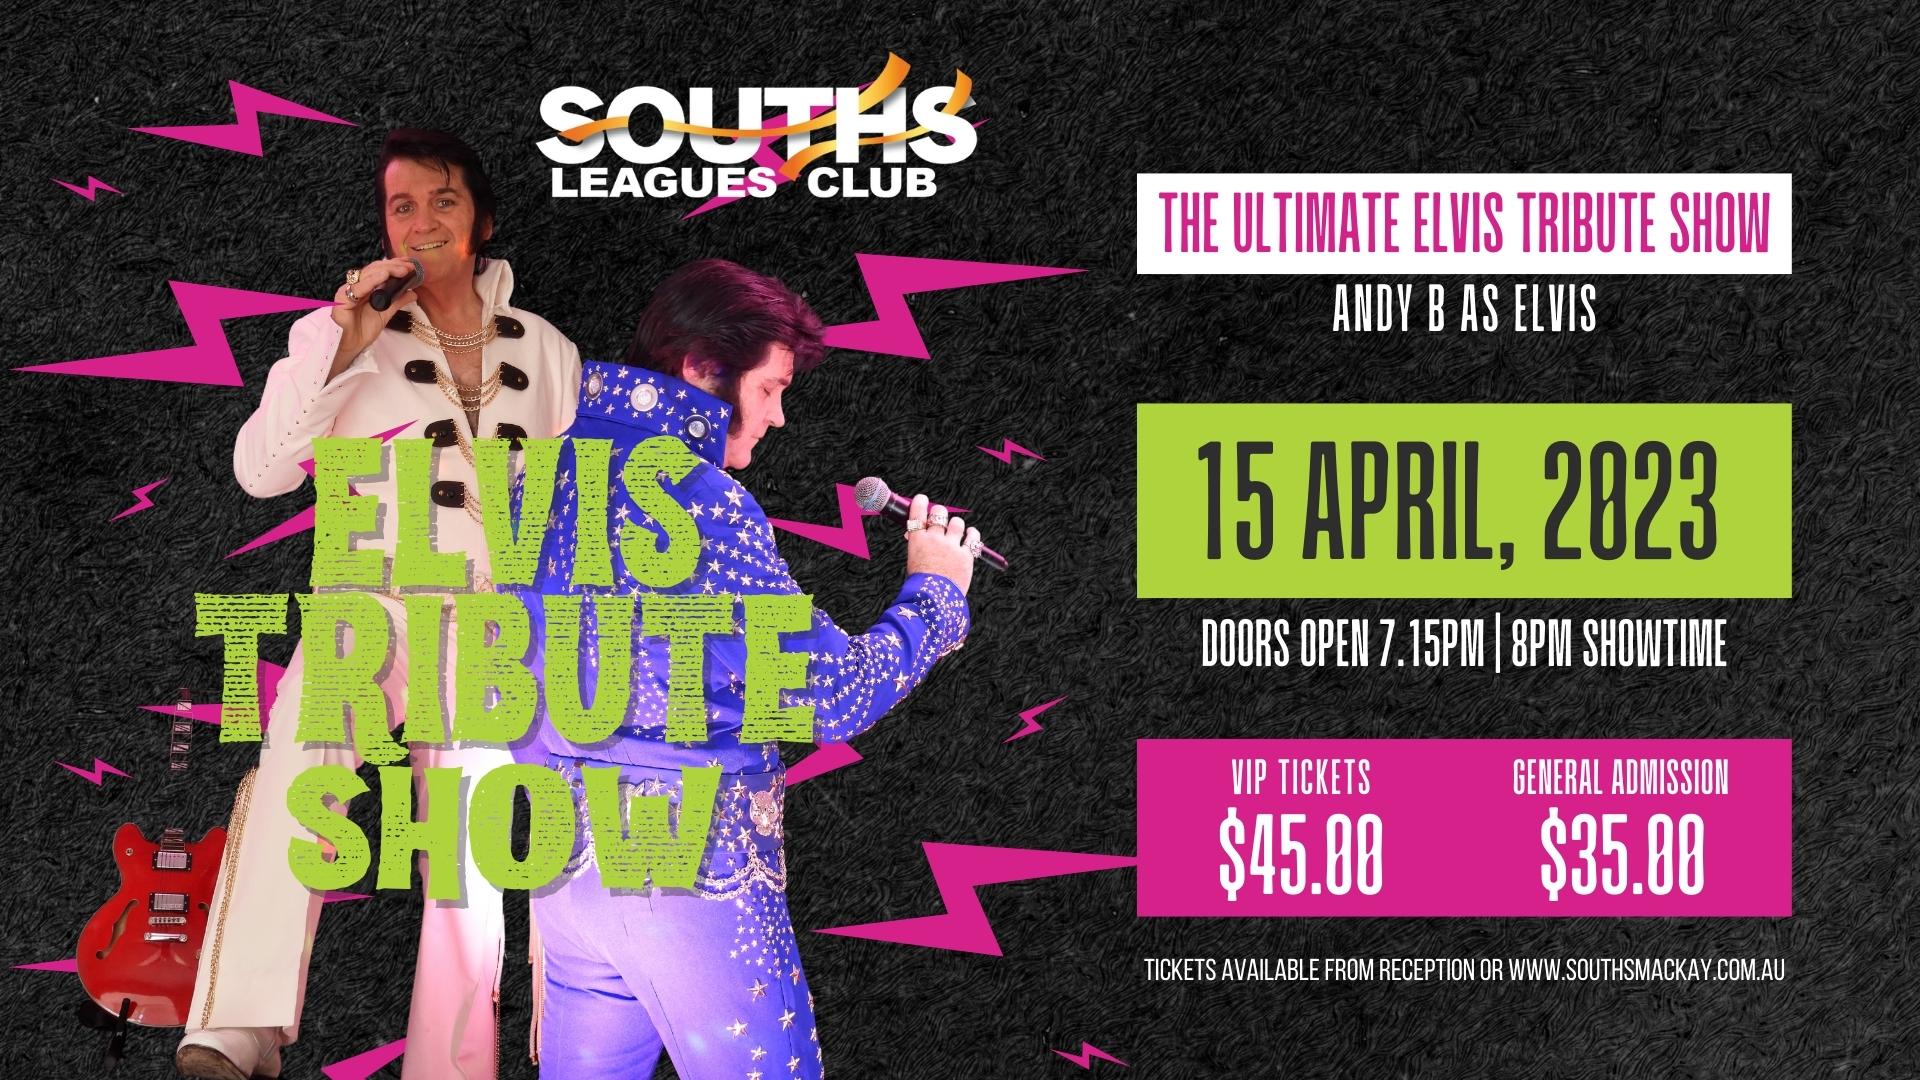 Event Poster for Elvis Presley Tribute Show @ Souths Leagues Club | Mackay | EventsontheHorizon.com